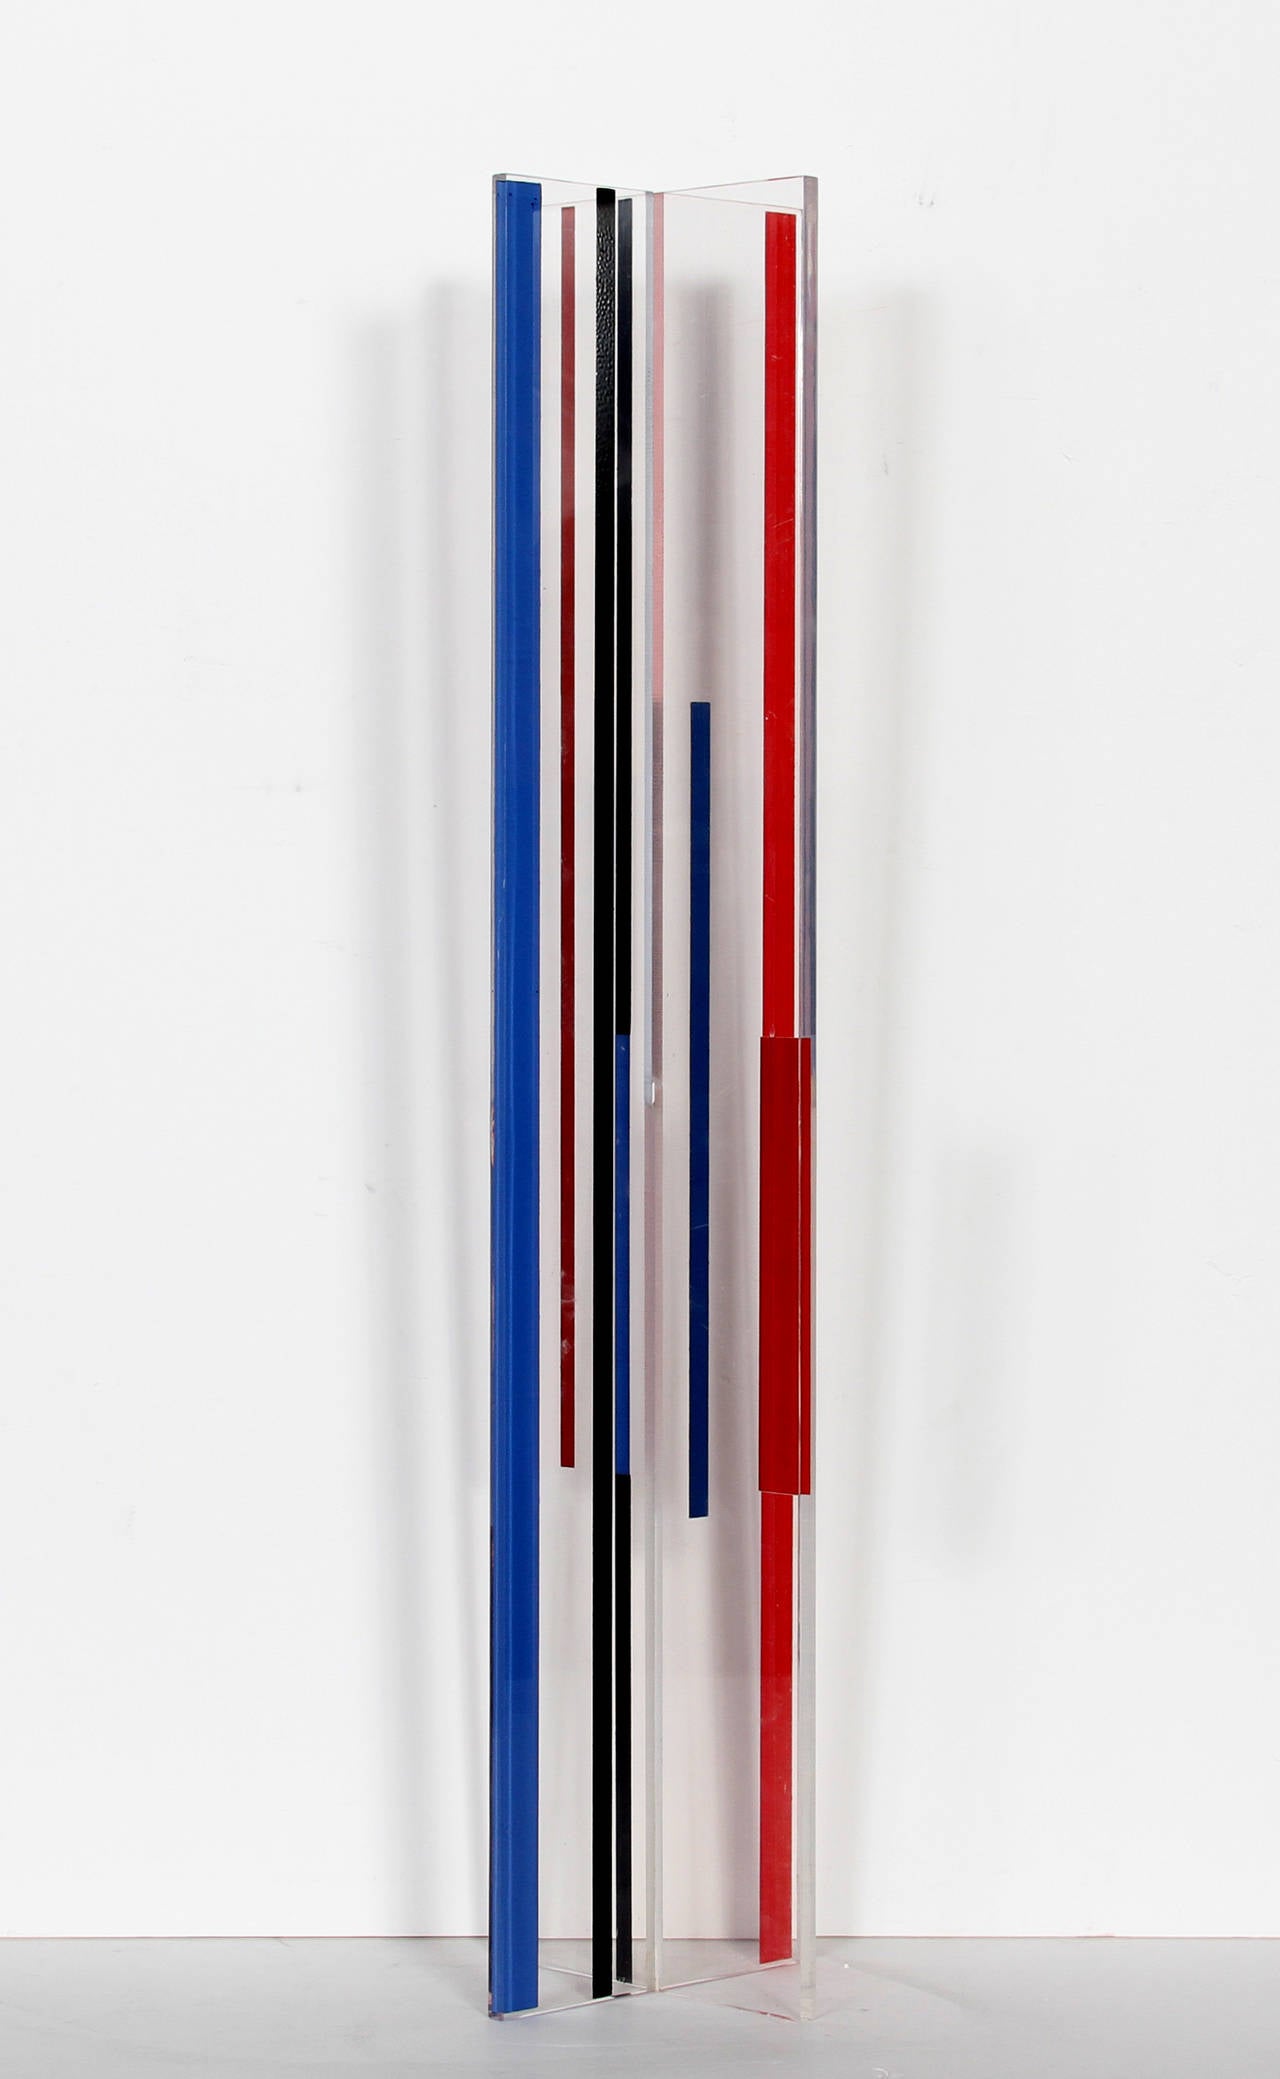 An acrylic sculpture by Ilya Bolotowski circa 1975. A minimalist modern sculpture of abstract linear design. 

Artist: Ilya Bolotowsky, Russian/American (1907 - 1981)
Title: Untitled I
Year: circa 1970
Medium: Acrylic Sculpture, signature and